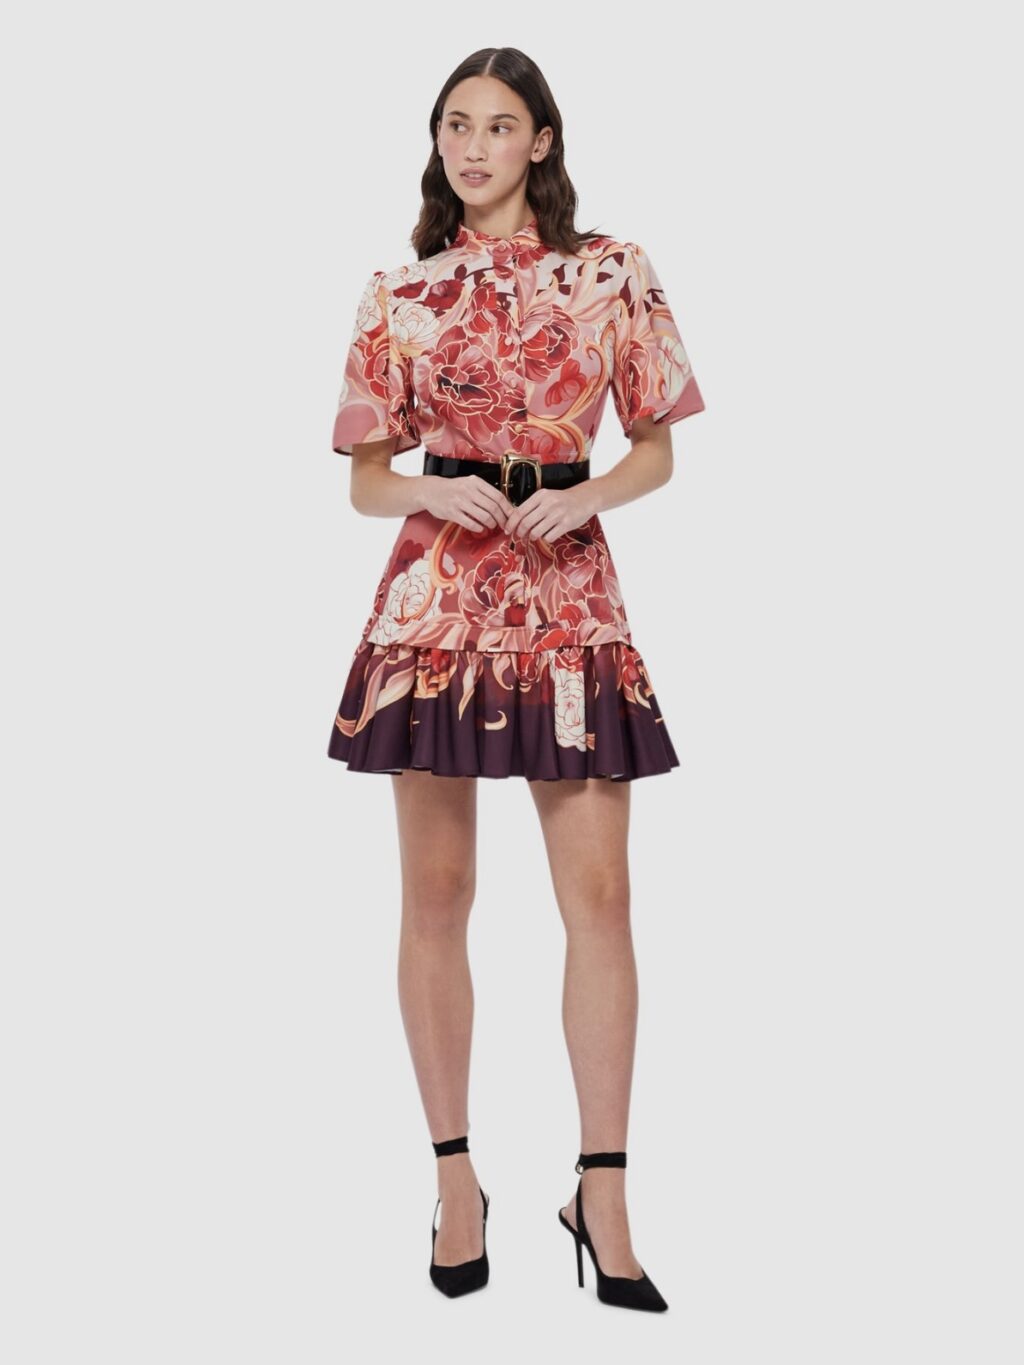 Leo Lin Beatrice Short Sleeve Mini Dress for hire.